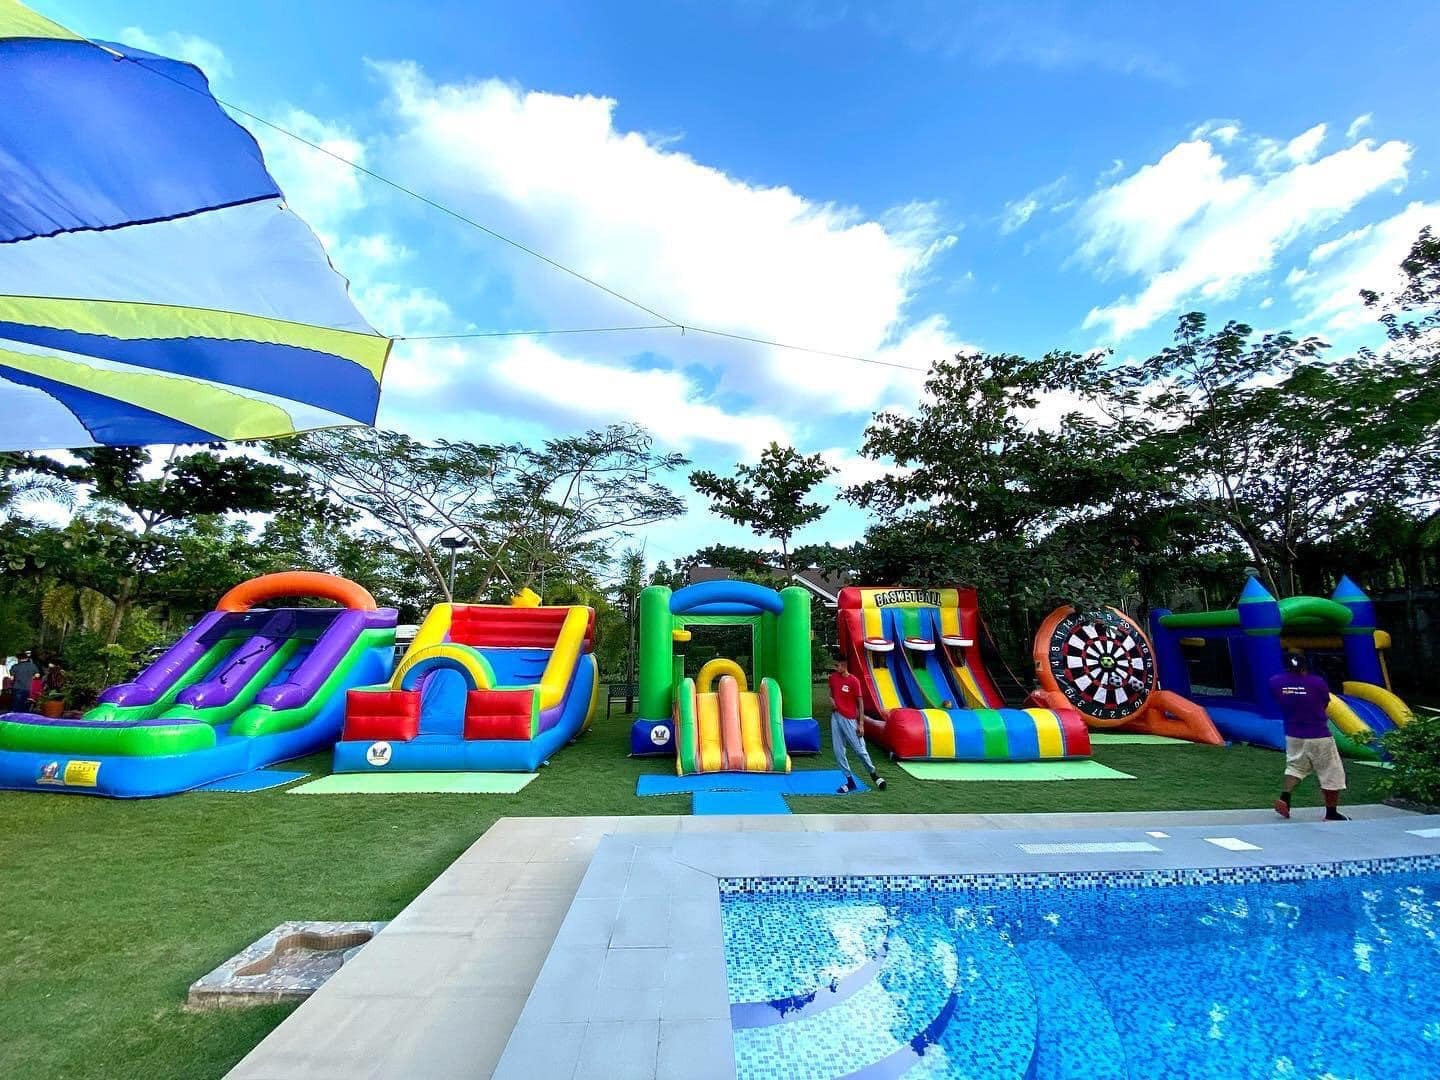 Bacolor Resort